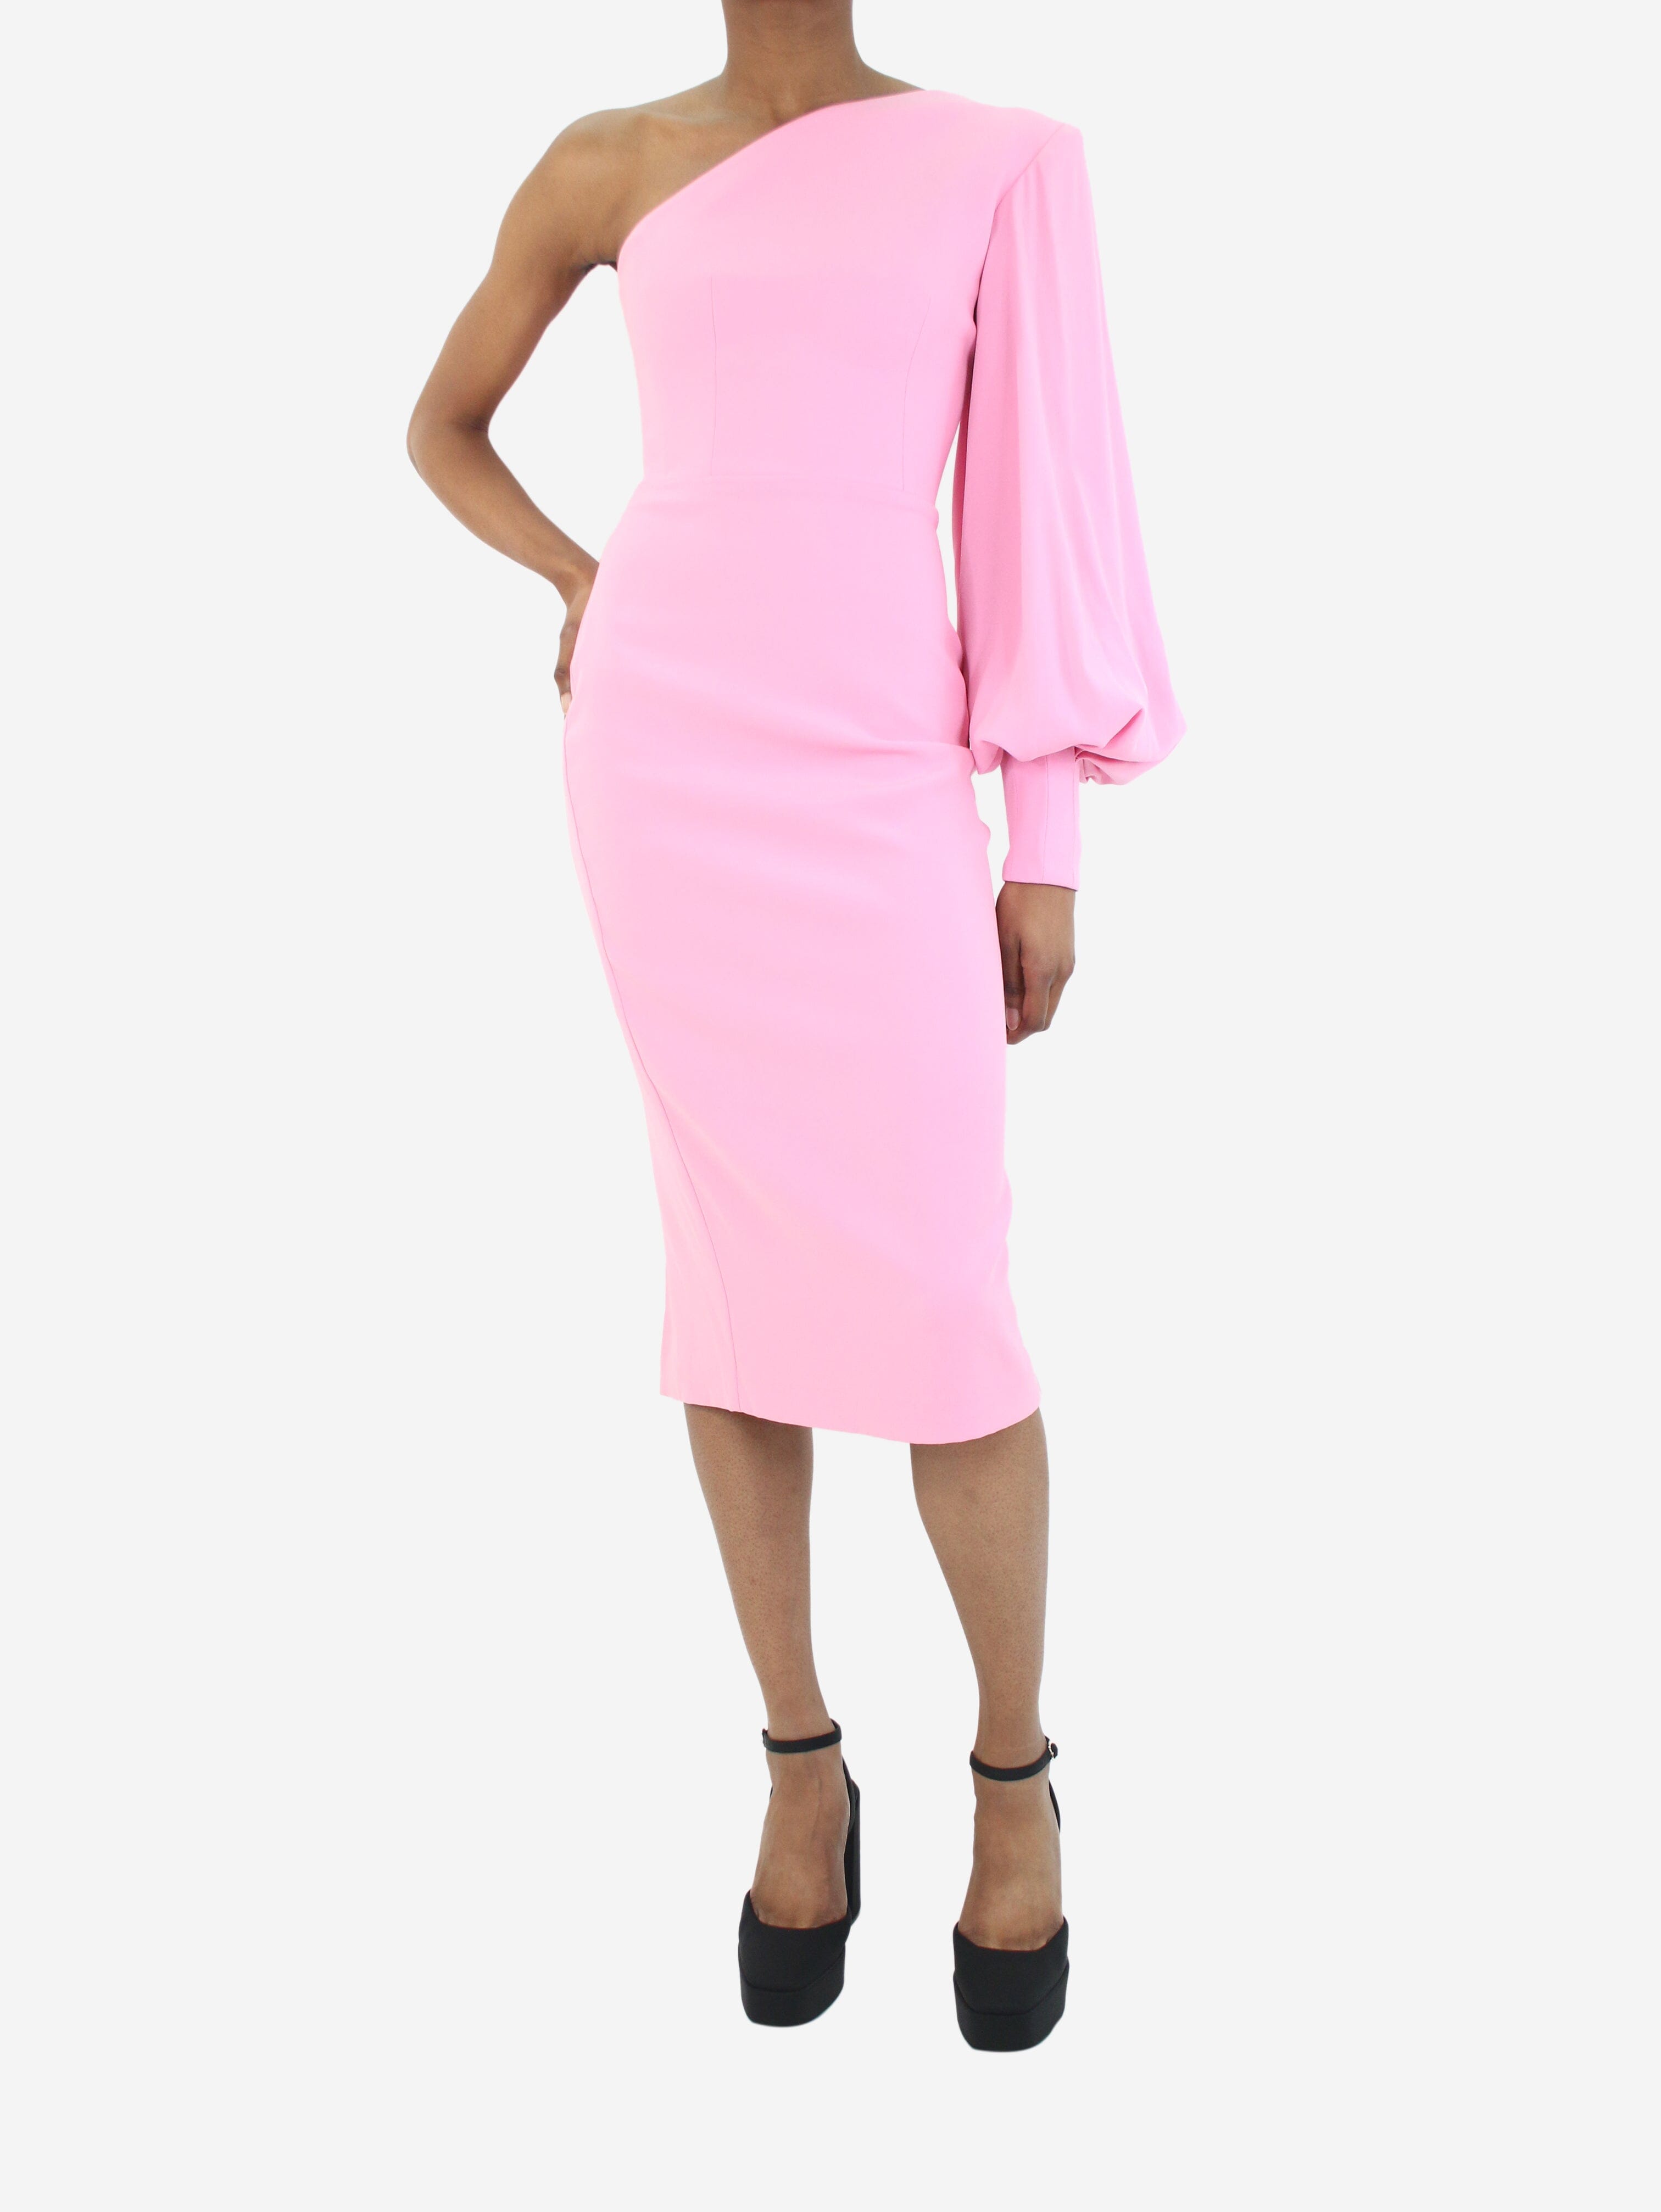 Pink satin crepe single balloon sleeve dress - size UK 6